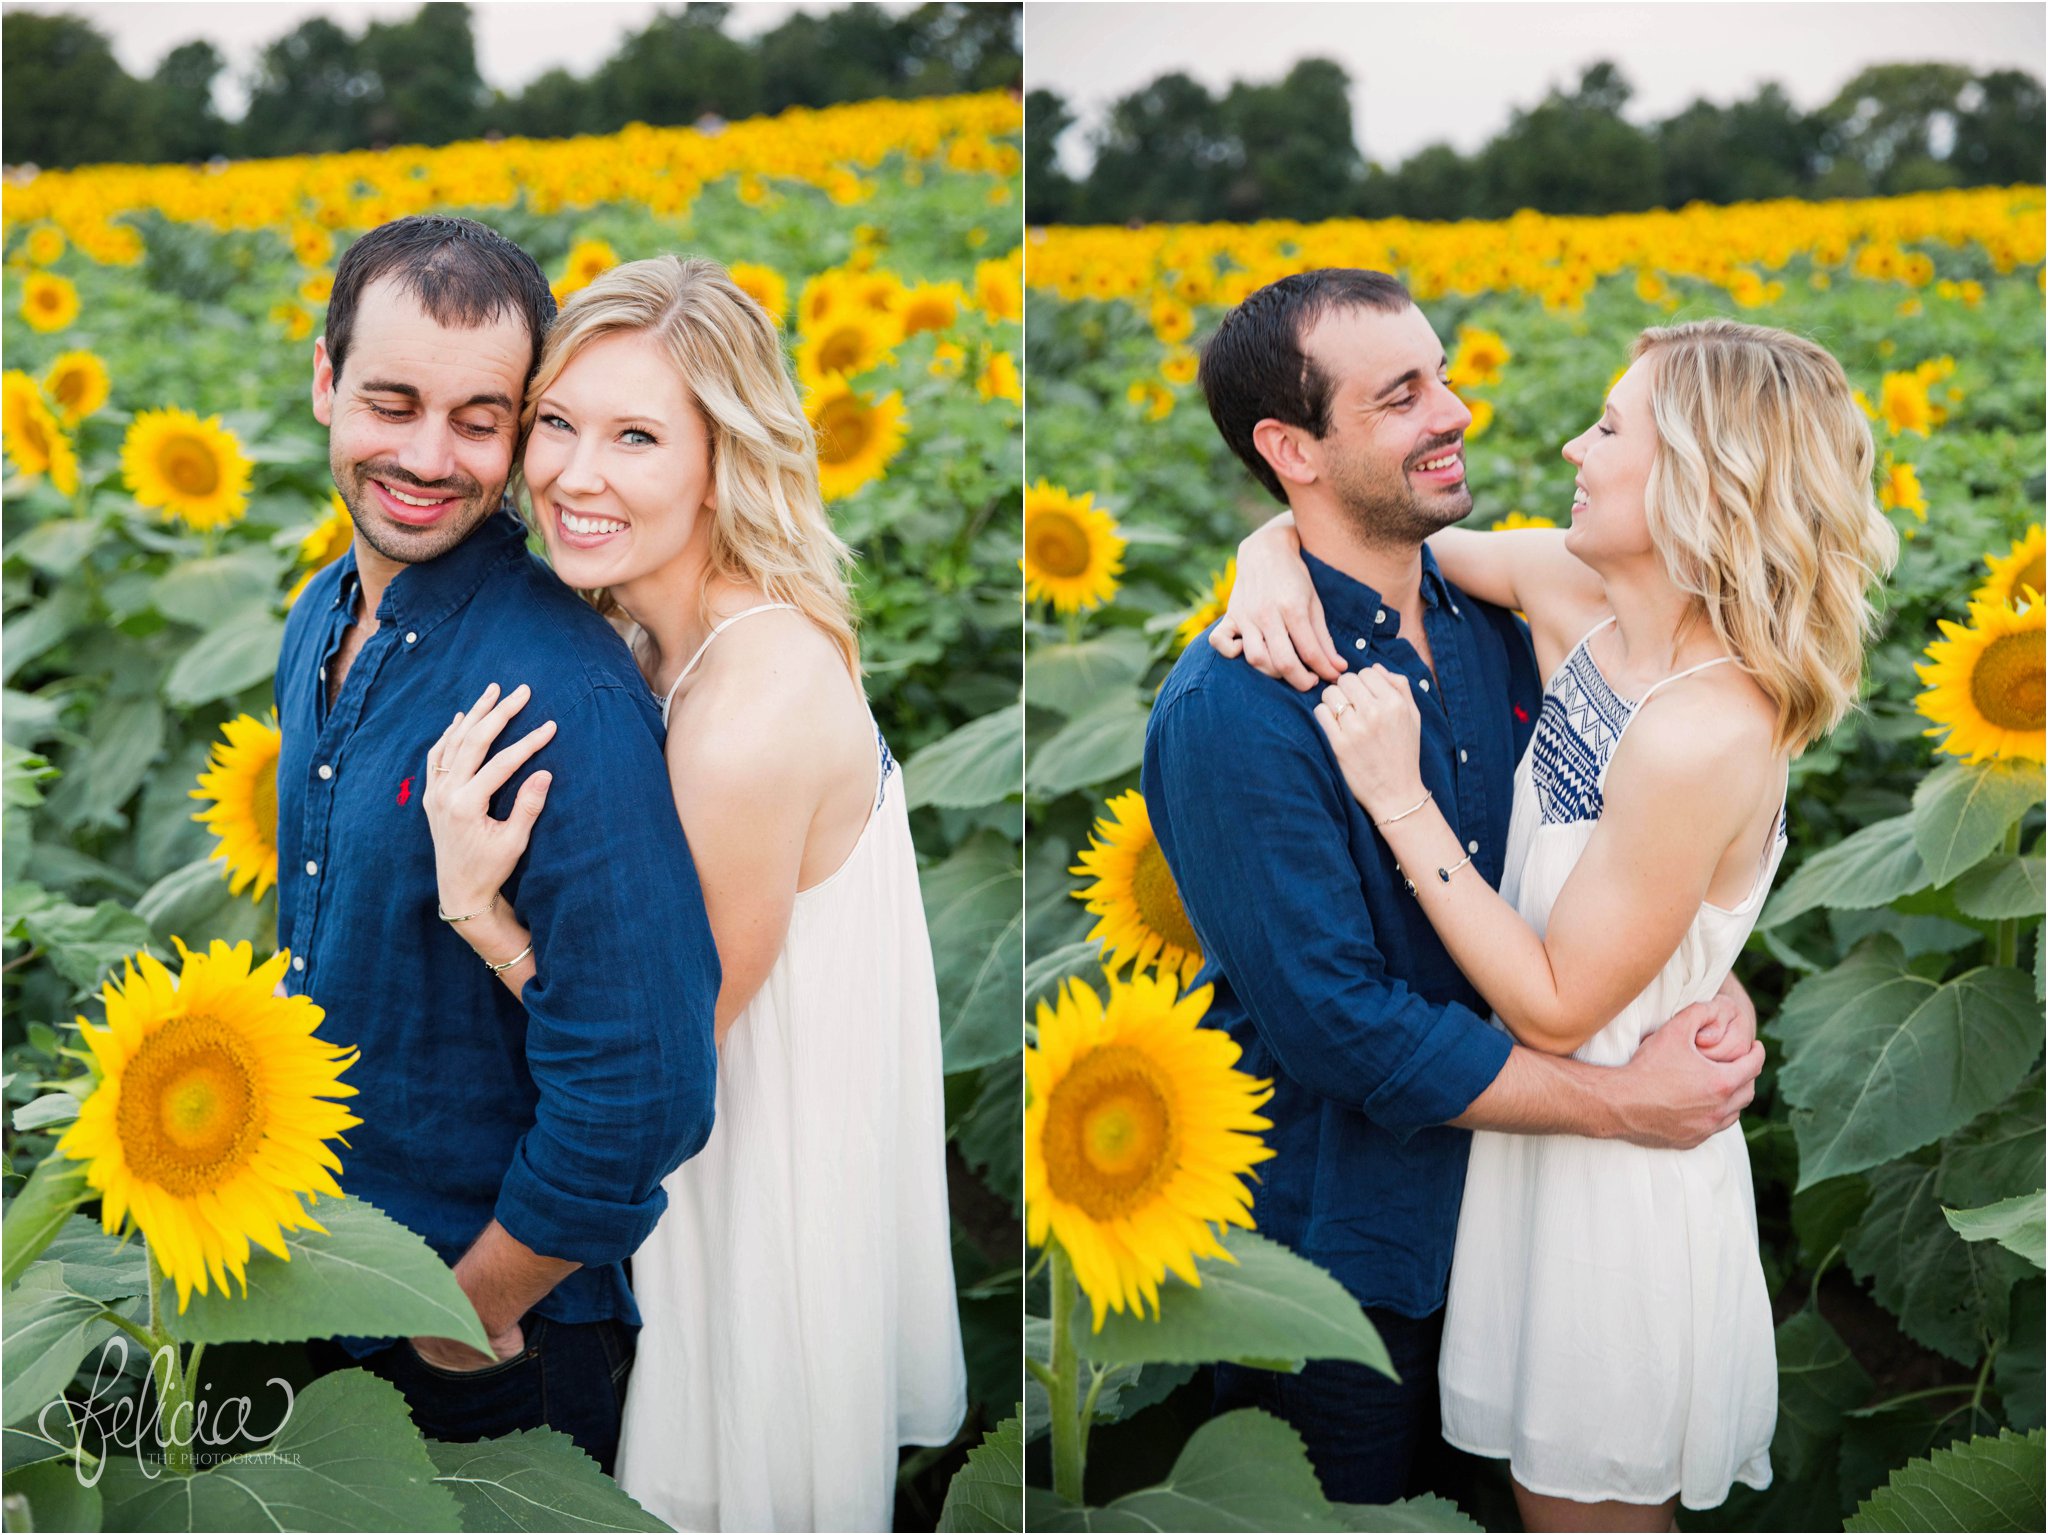 Sunrise Engagement Photos | Felicia The Photographer | Sunflower field | hug from behind